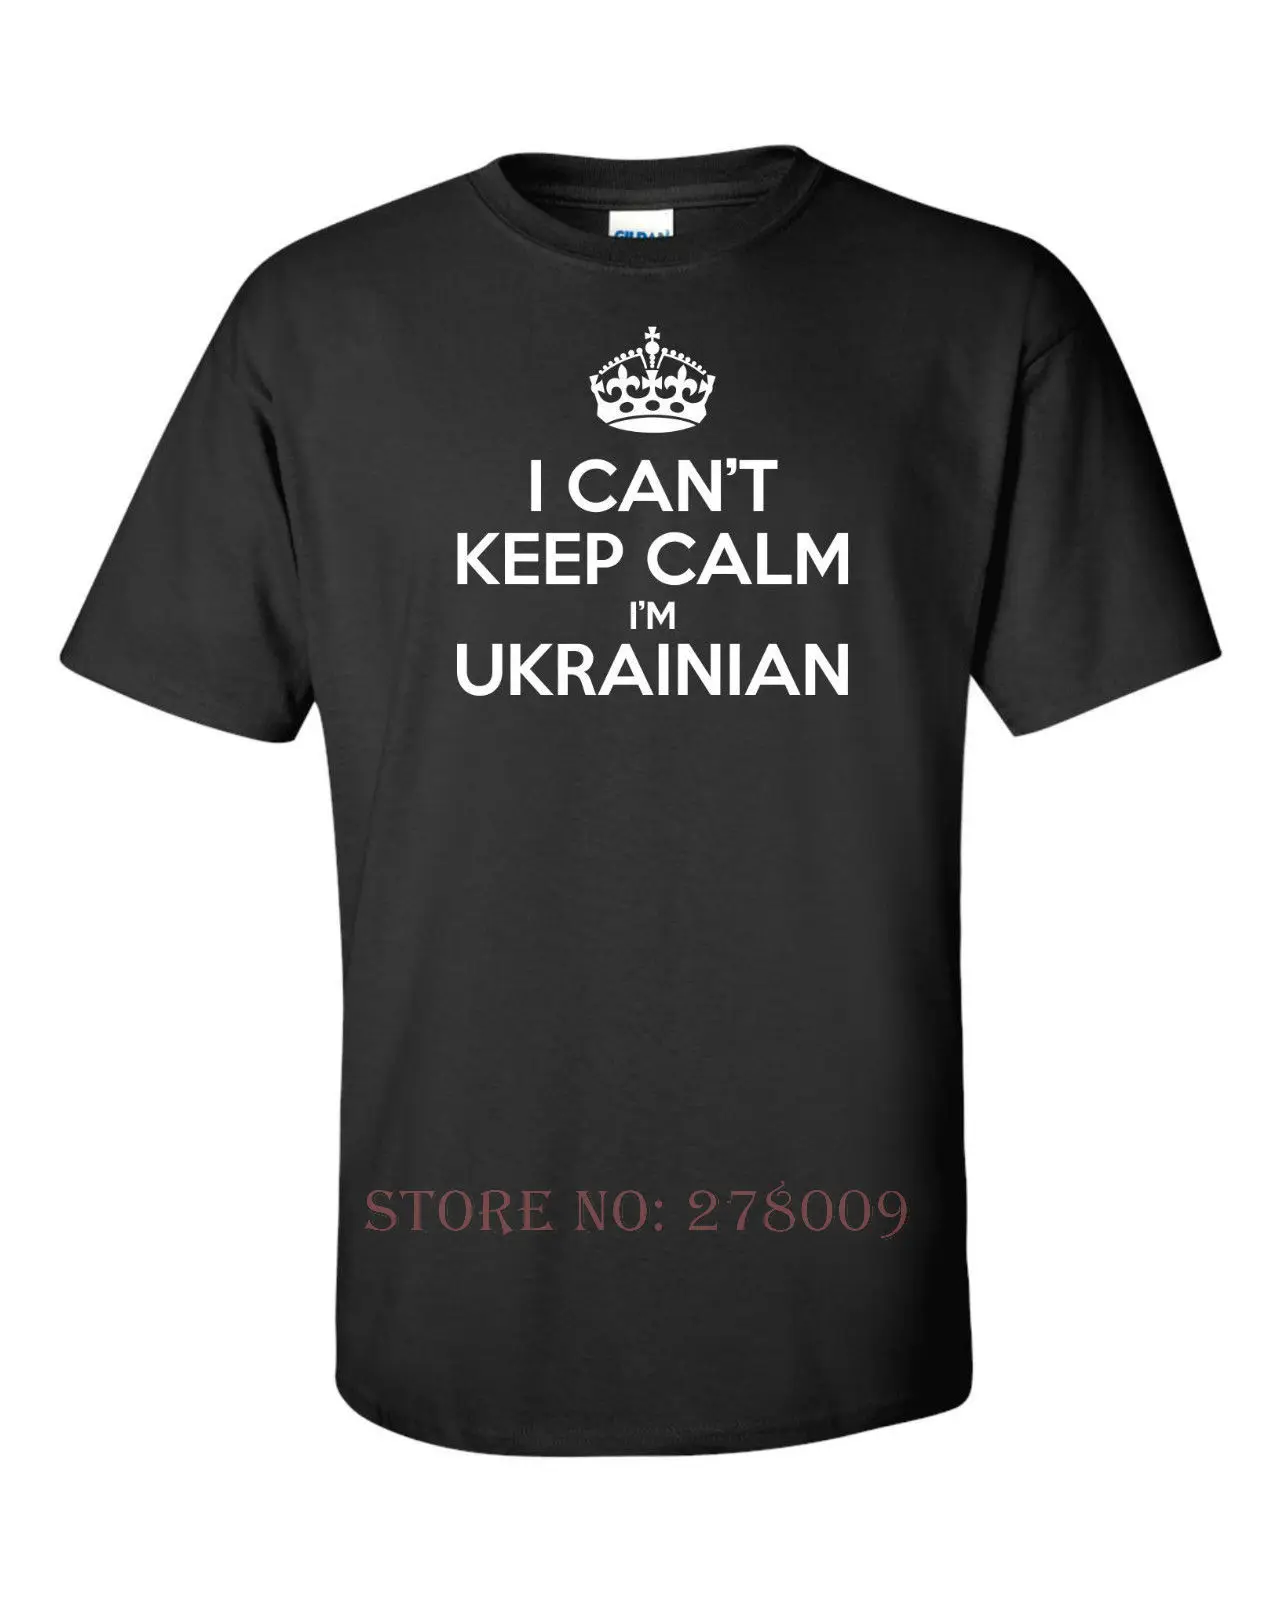 I CAN'T KEEP CALM I'M UKRAINIAN funny mens t shirt gift